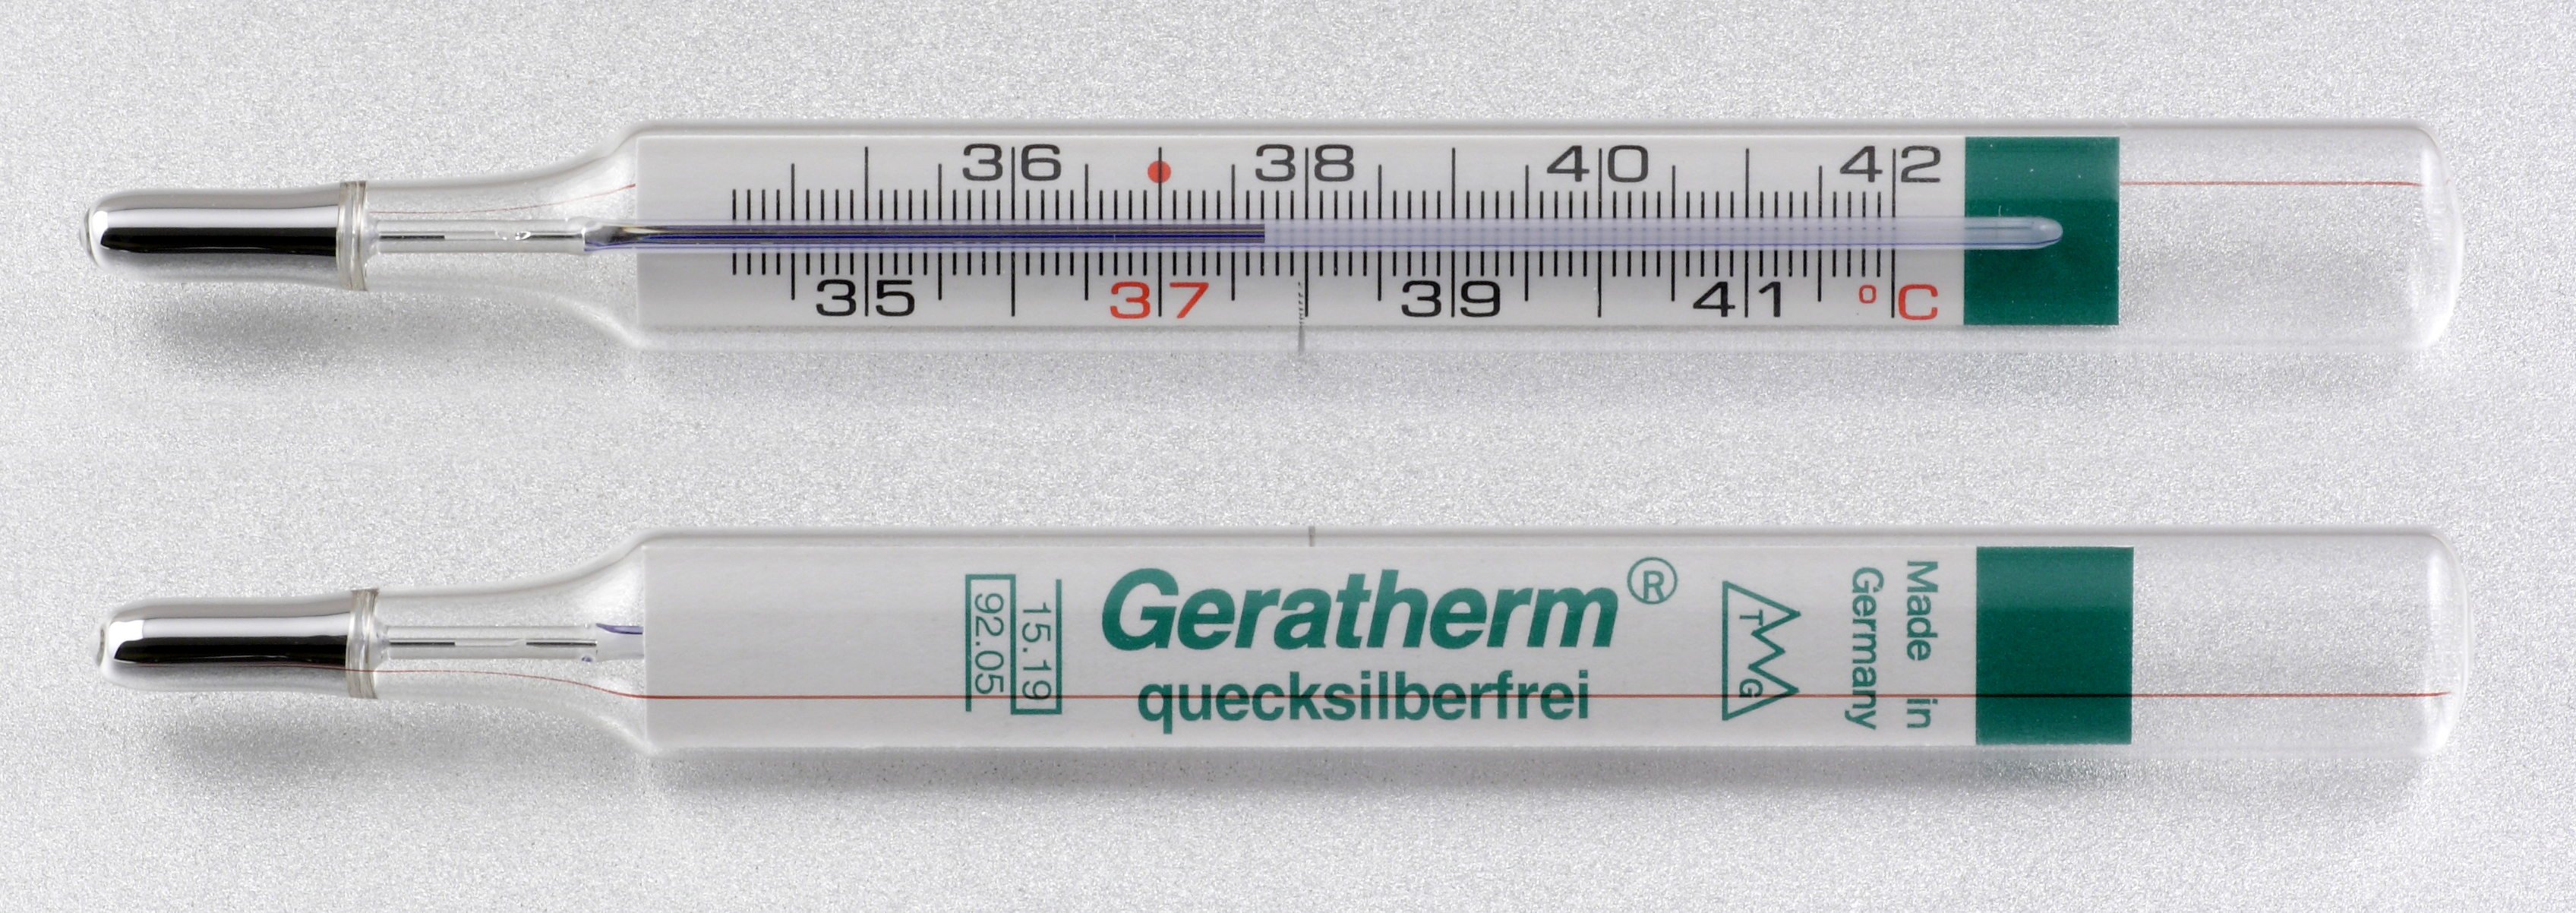 Galinstan-Fieberthermometer.jpg